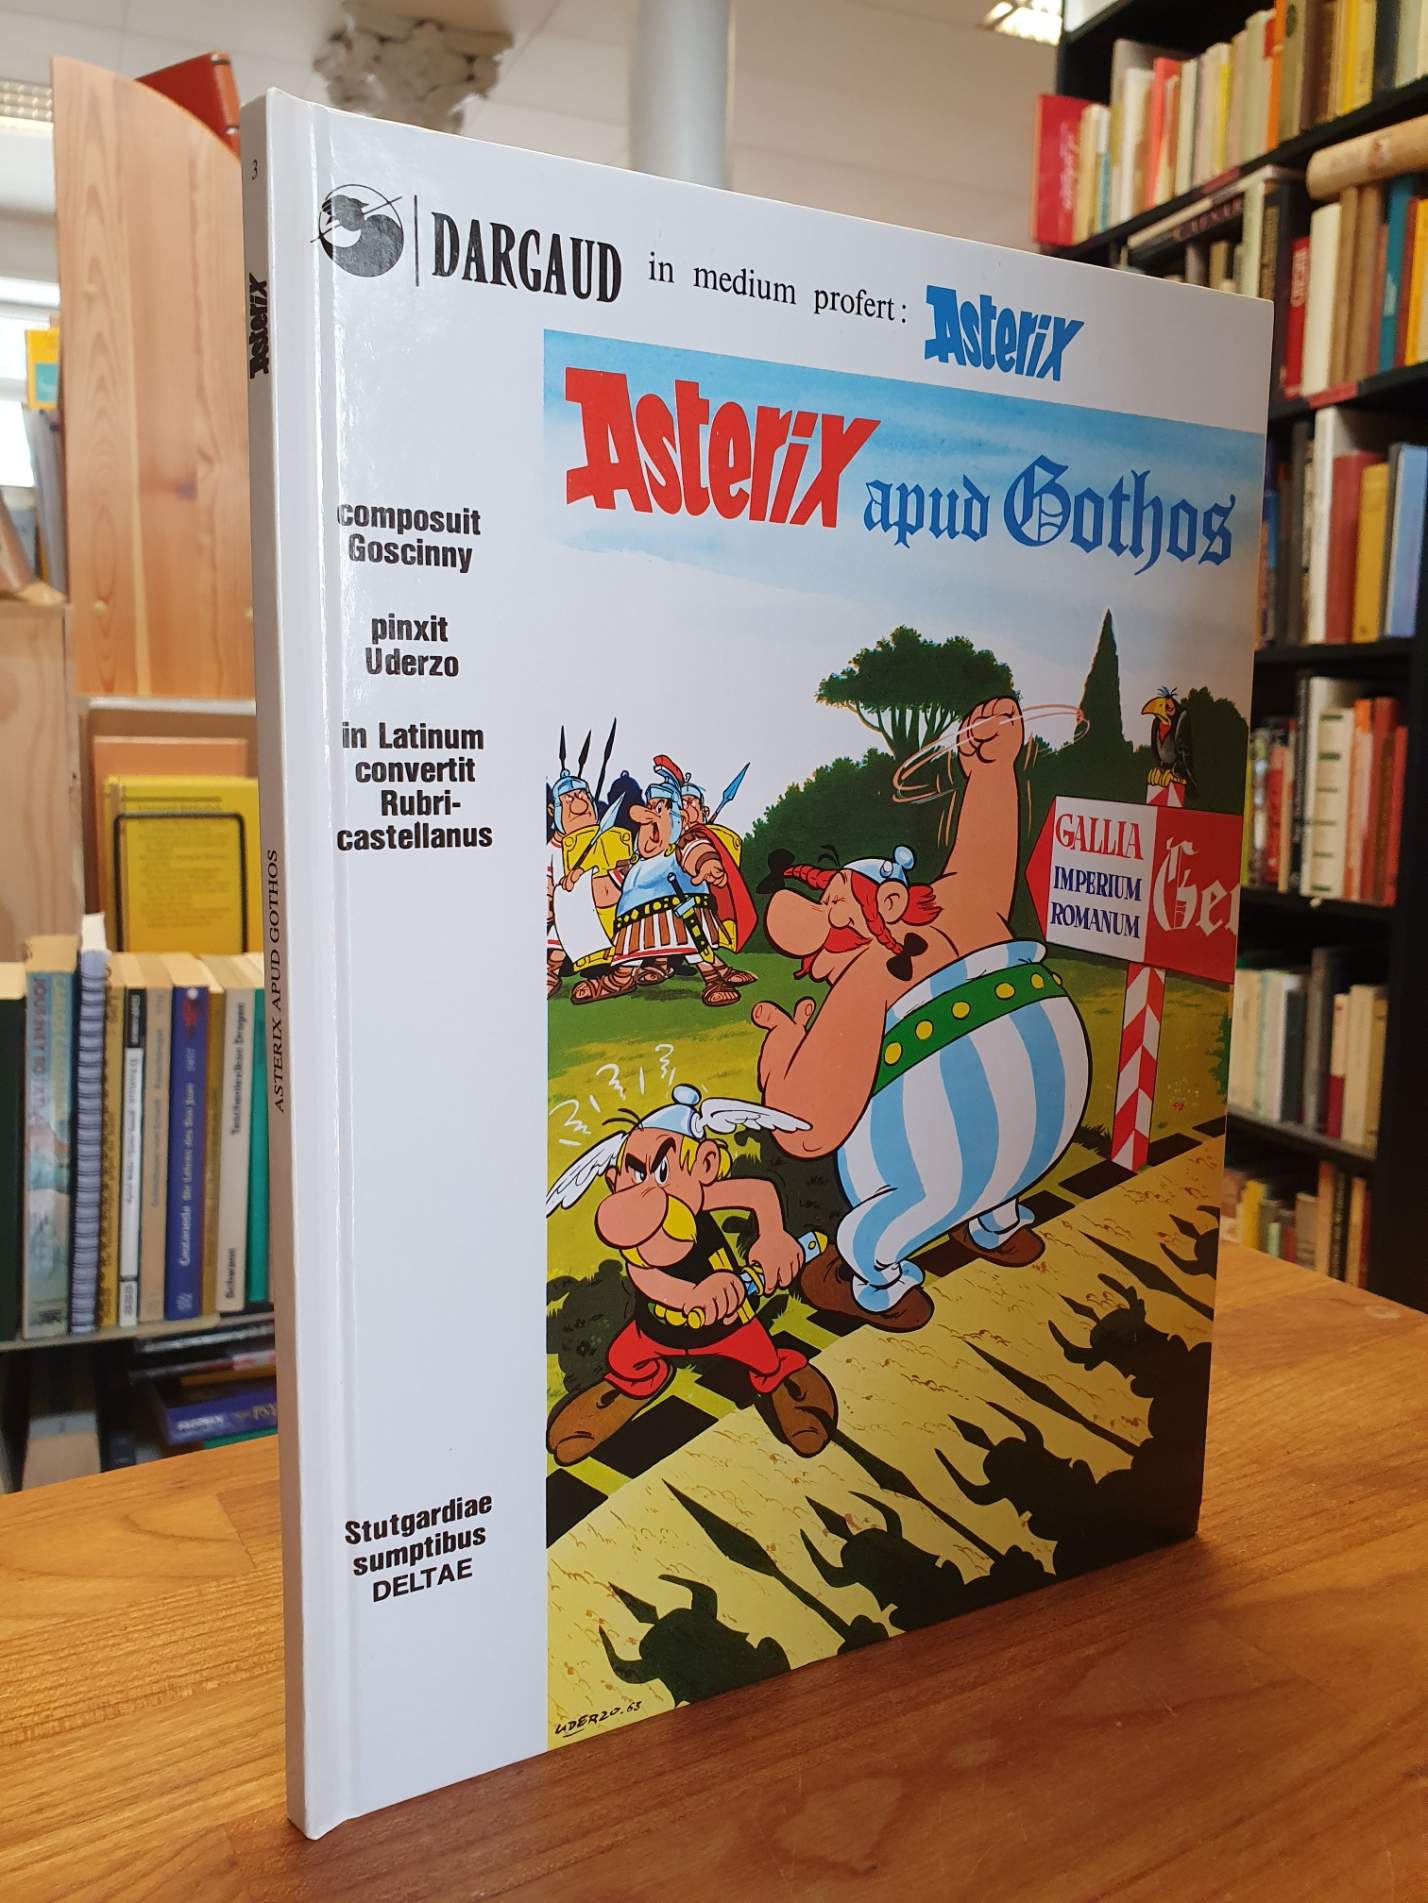 Goscinny, Asterix apud Gothos,